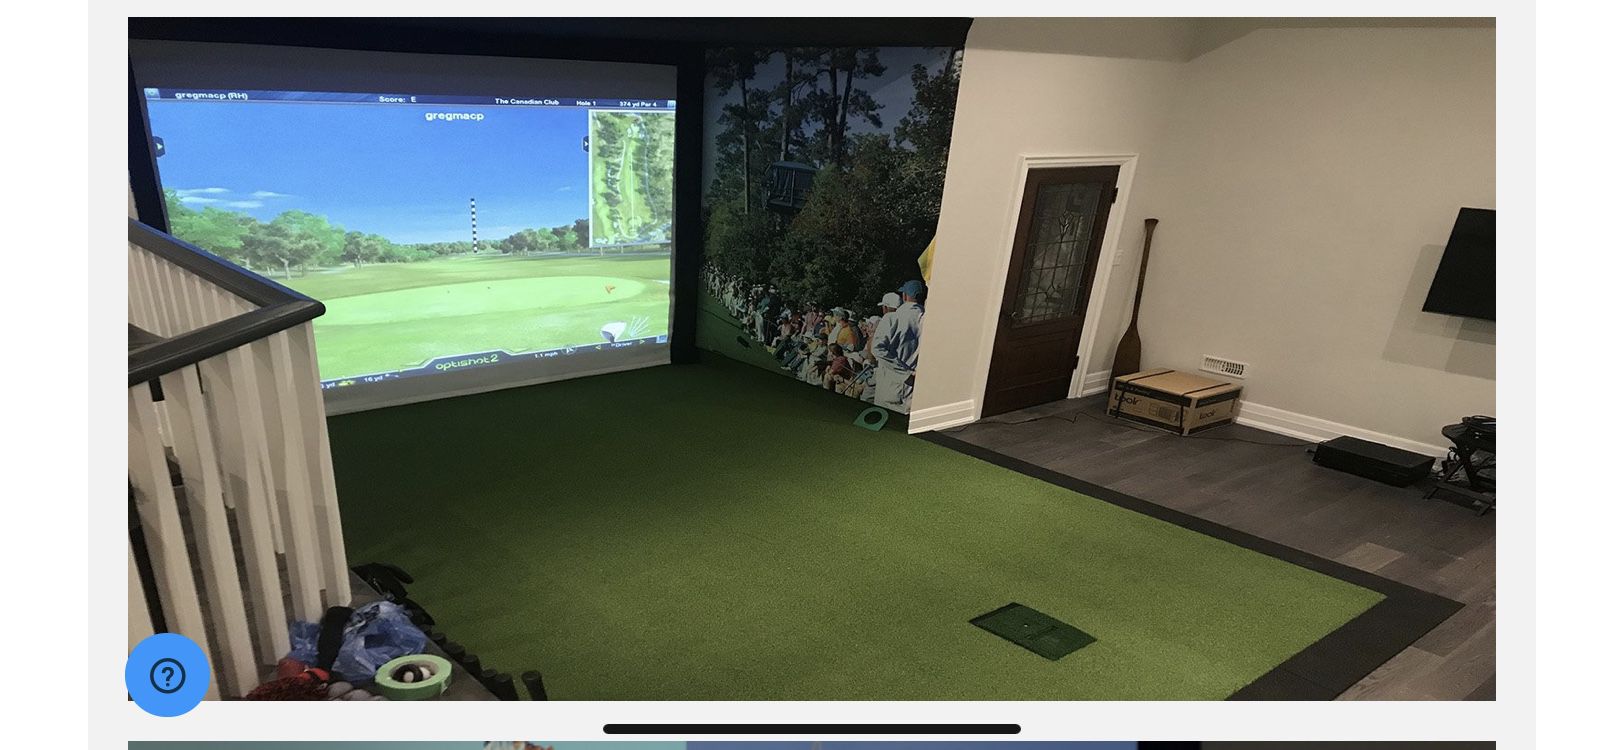 Optishot 2 golf simulator